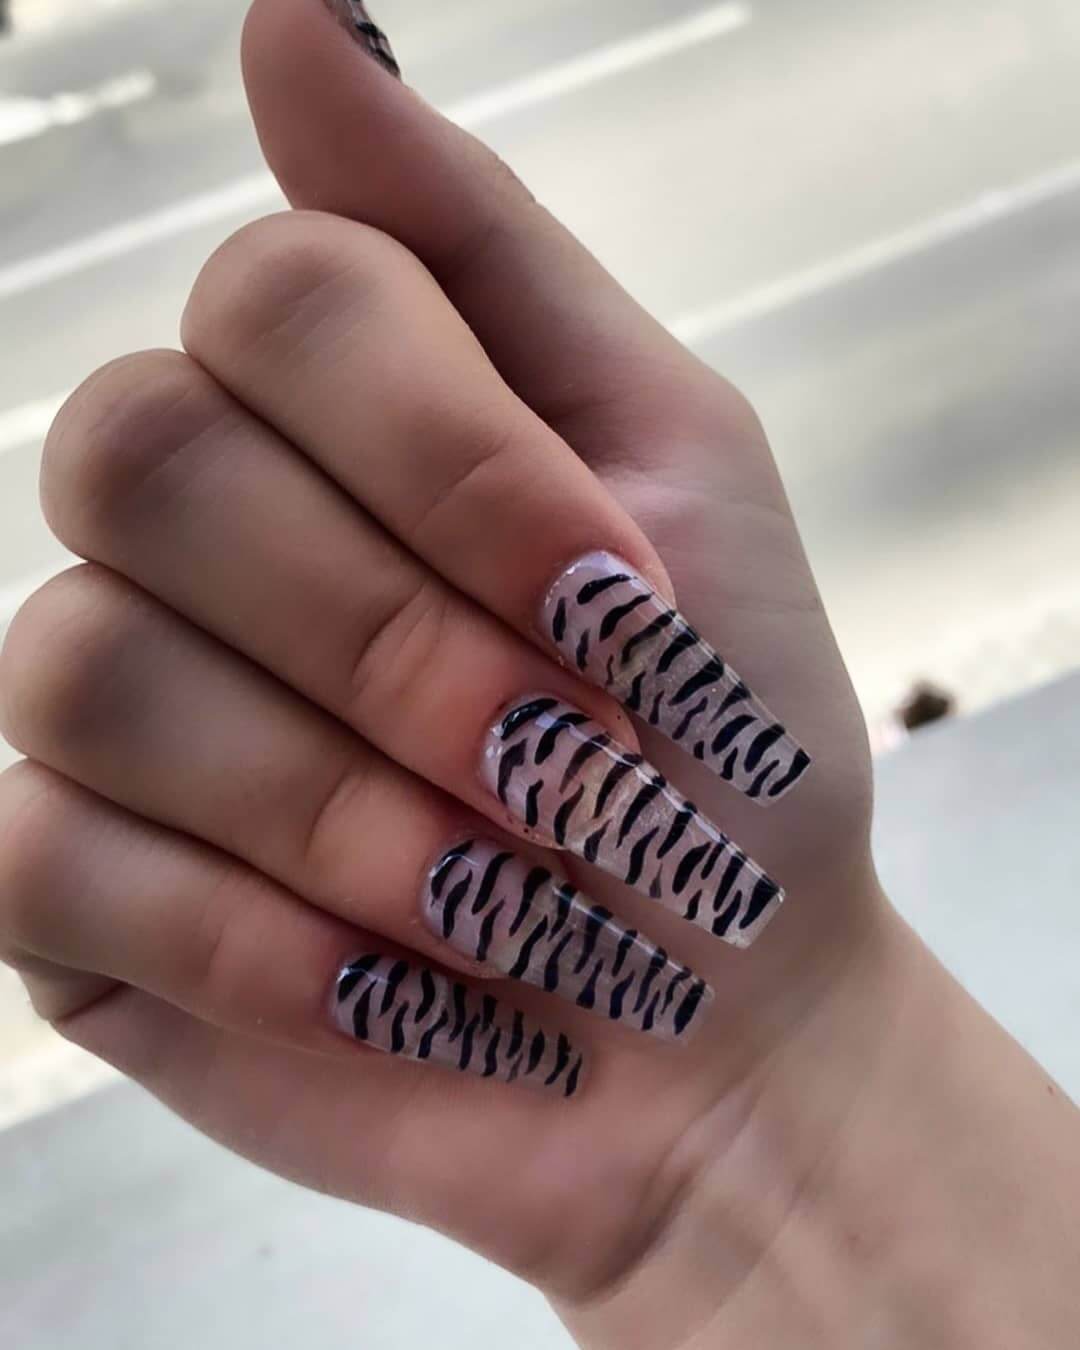 Zebra Nail Art Design Galaxy get theme zebra nail art